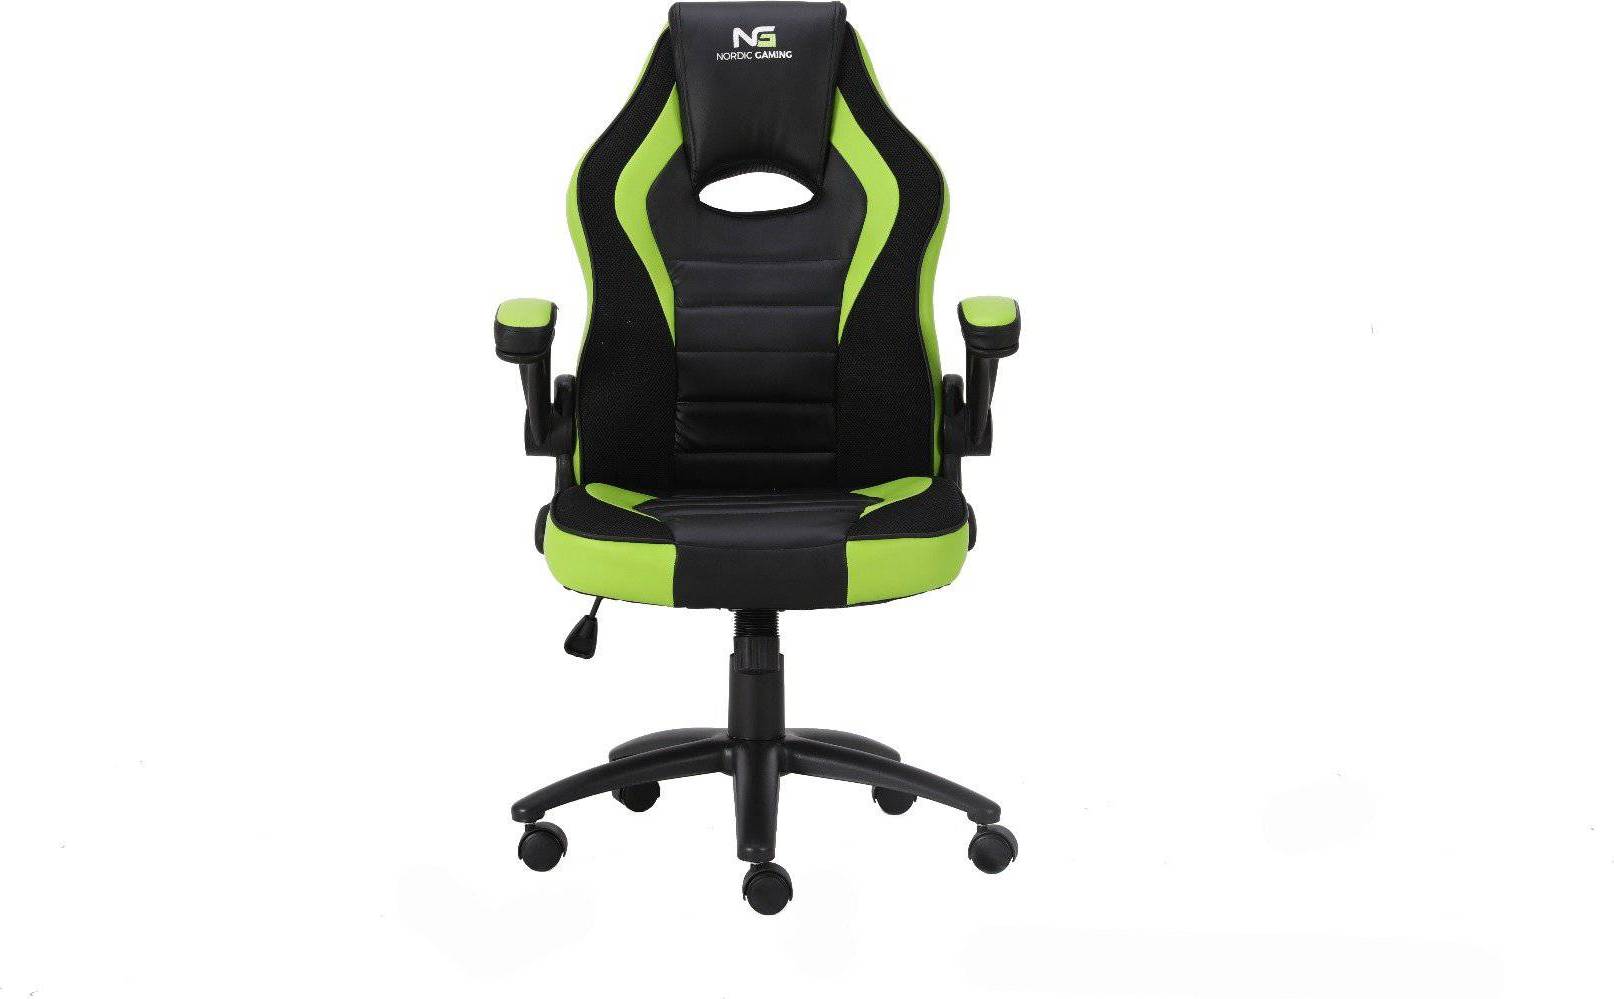  Bild på Nordic Gaming Charger V2 Gaming Chair - Black/Green gamingstol